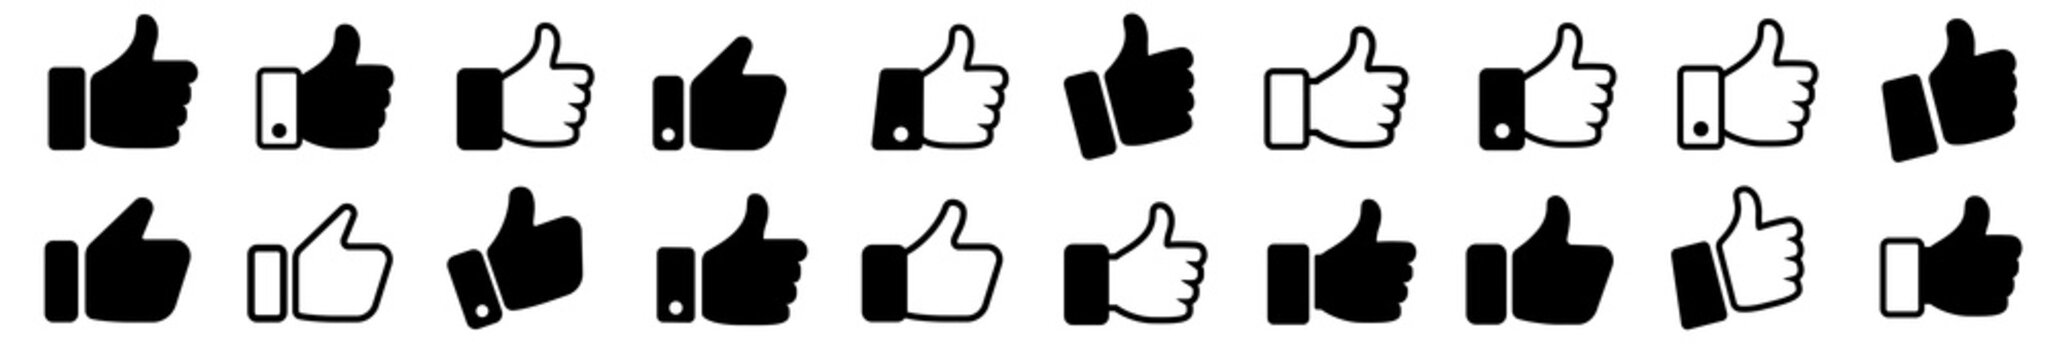 Set thumb up icon vector. Finger up symbol. I like sign isolated on white background - vector illustration